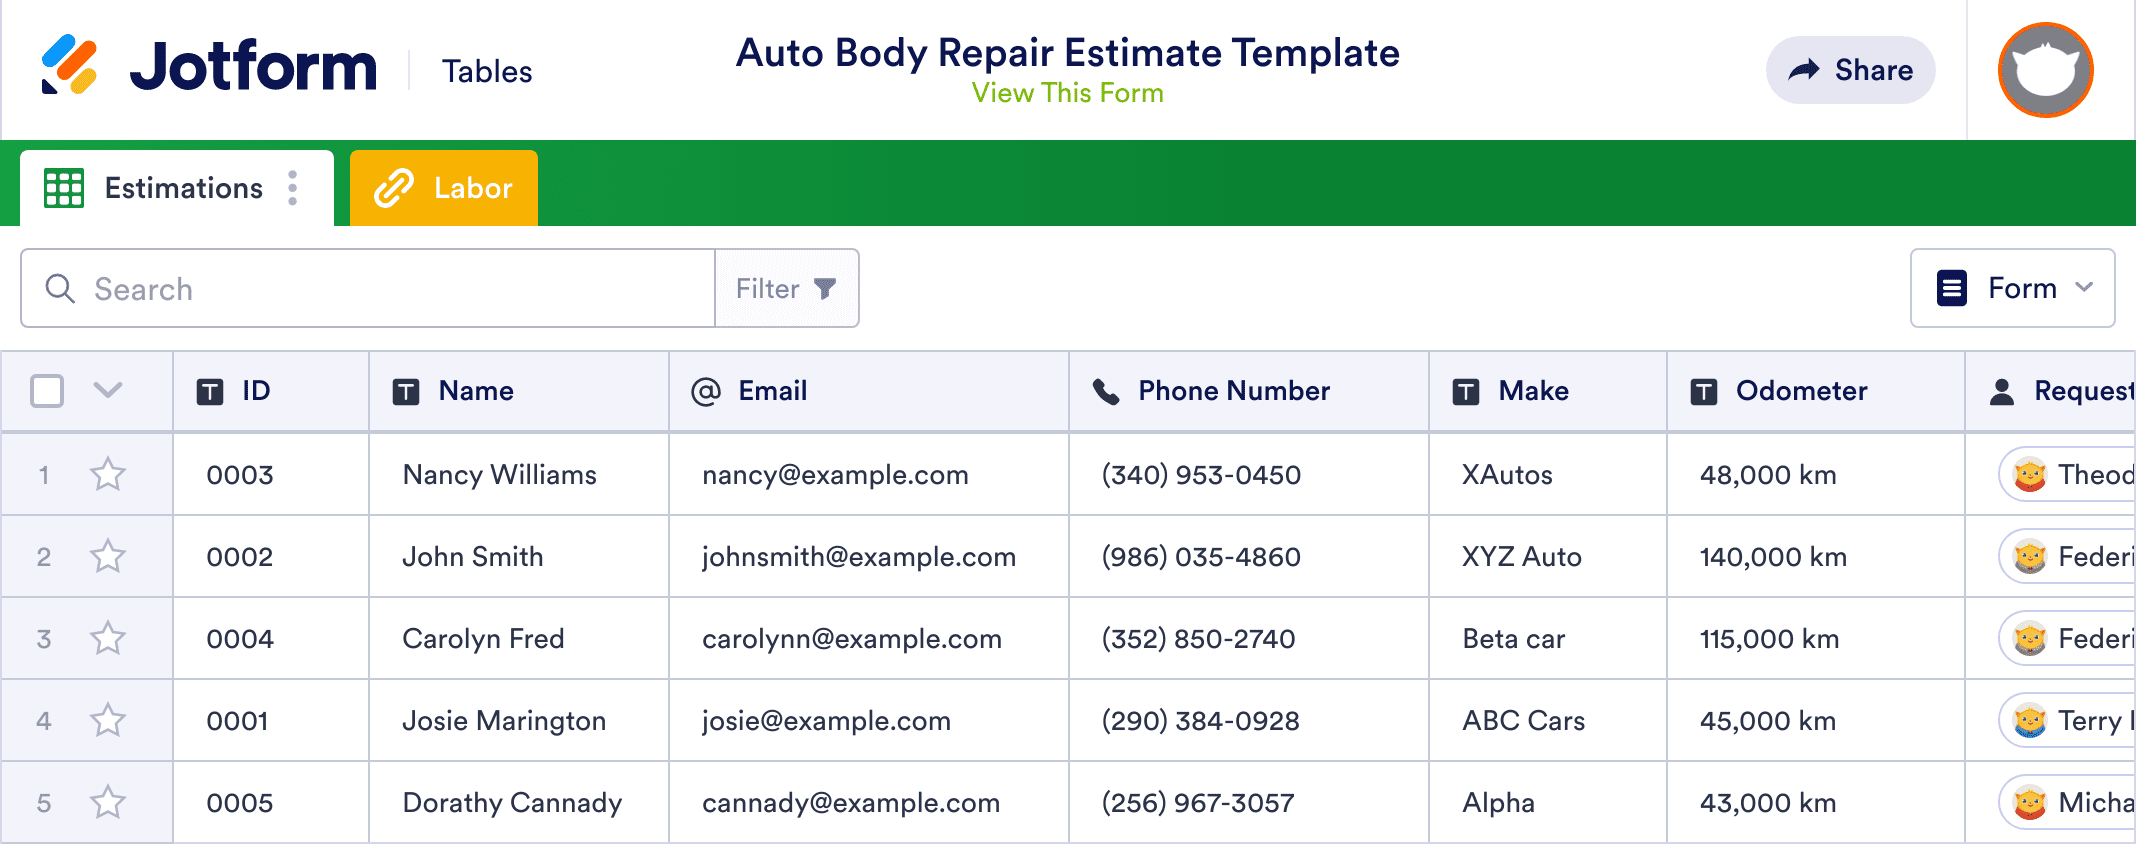 Auto Body Repair Estimate Template Jotform Tables